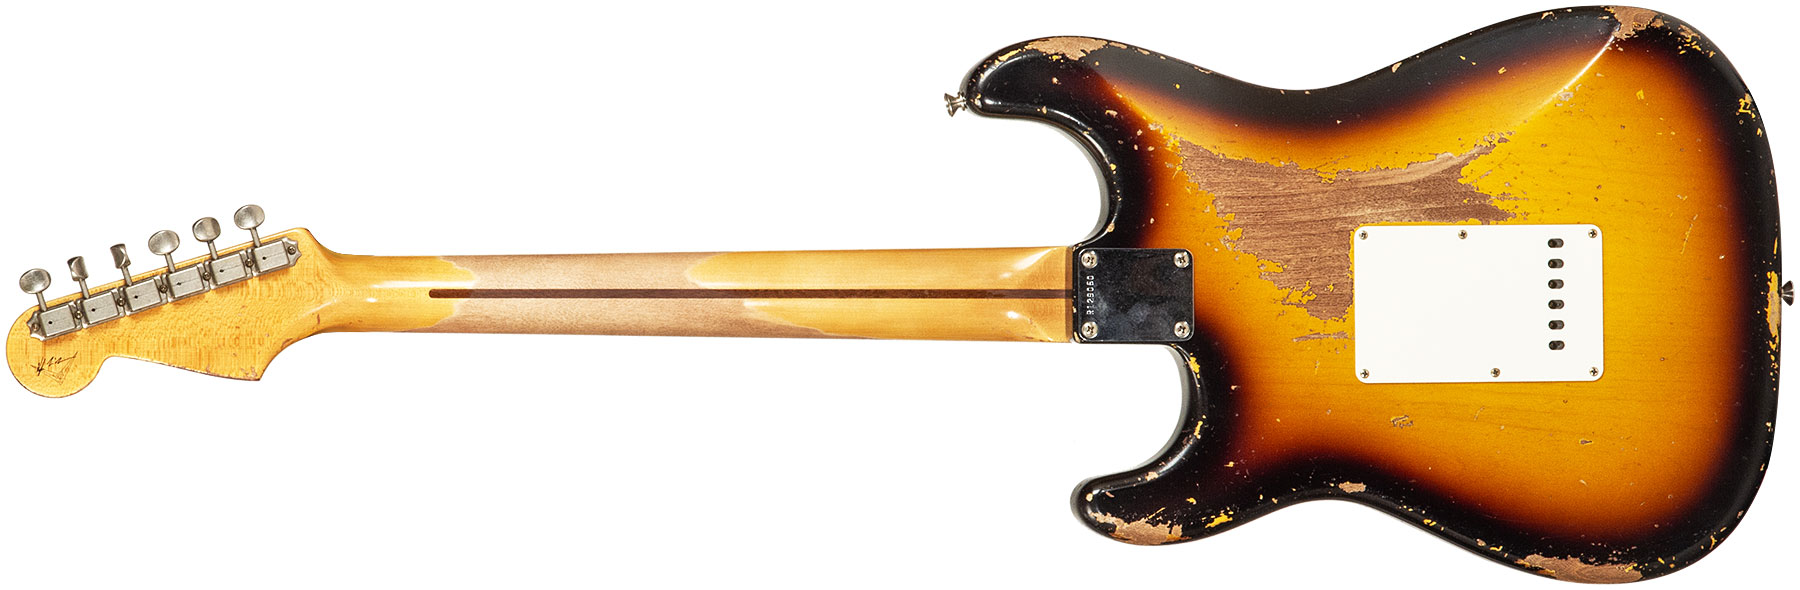 Fender Custom Shop Strat 1956 Masterbuilt K.mcmillin 3s Trem Mn #r129060 - Heavy Relic 2-color Sunburst - E-Gitarre in Str-Form - Variation 1